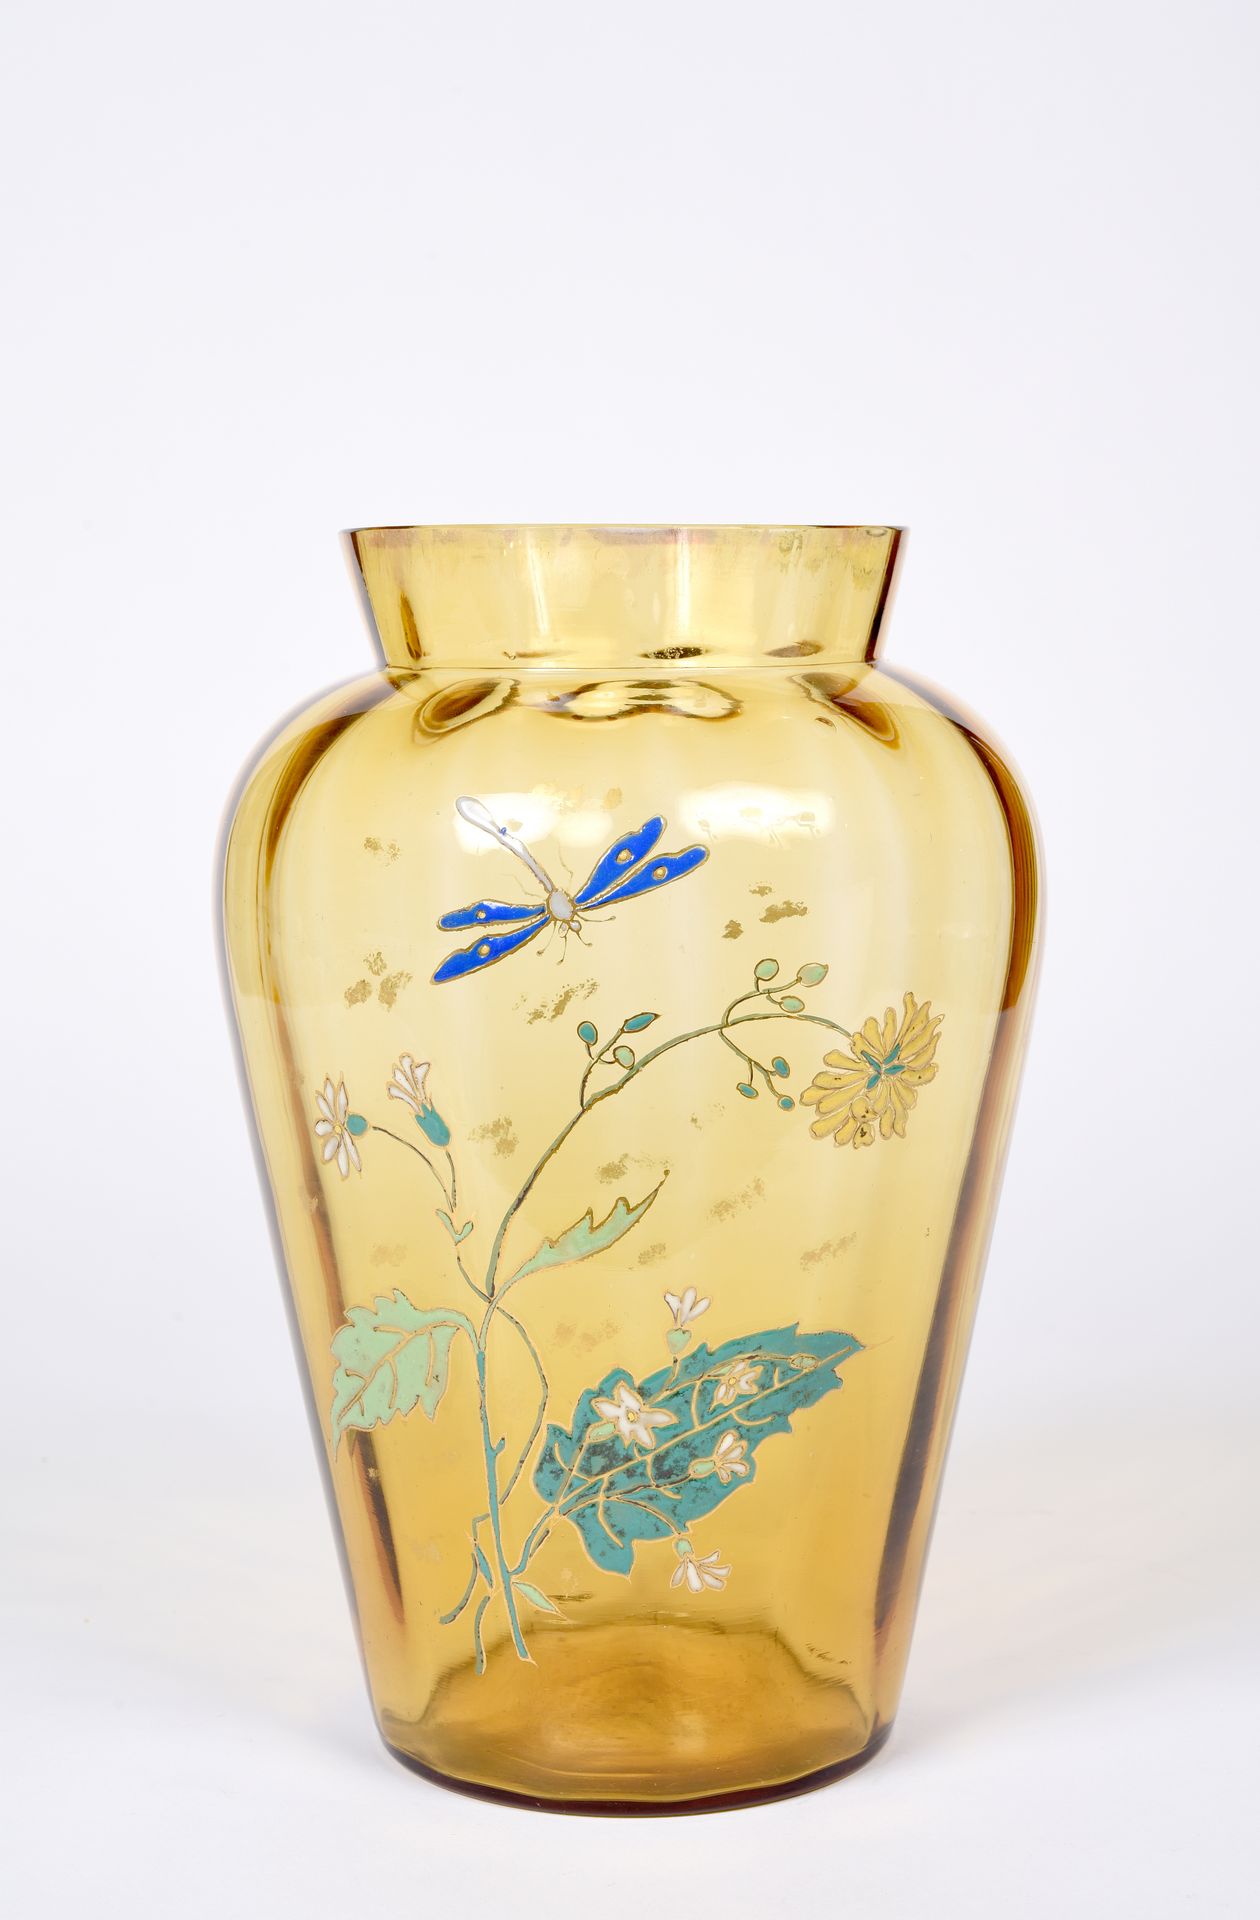 Null 埃米尔-加莱(1846-1904)

透明烟熏玻璃的柱状花瓶。

多色珐琅彩装饰的libellus和花朵。

底座下有签名 "E.Gallé Nanc&hellip;